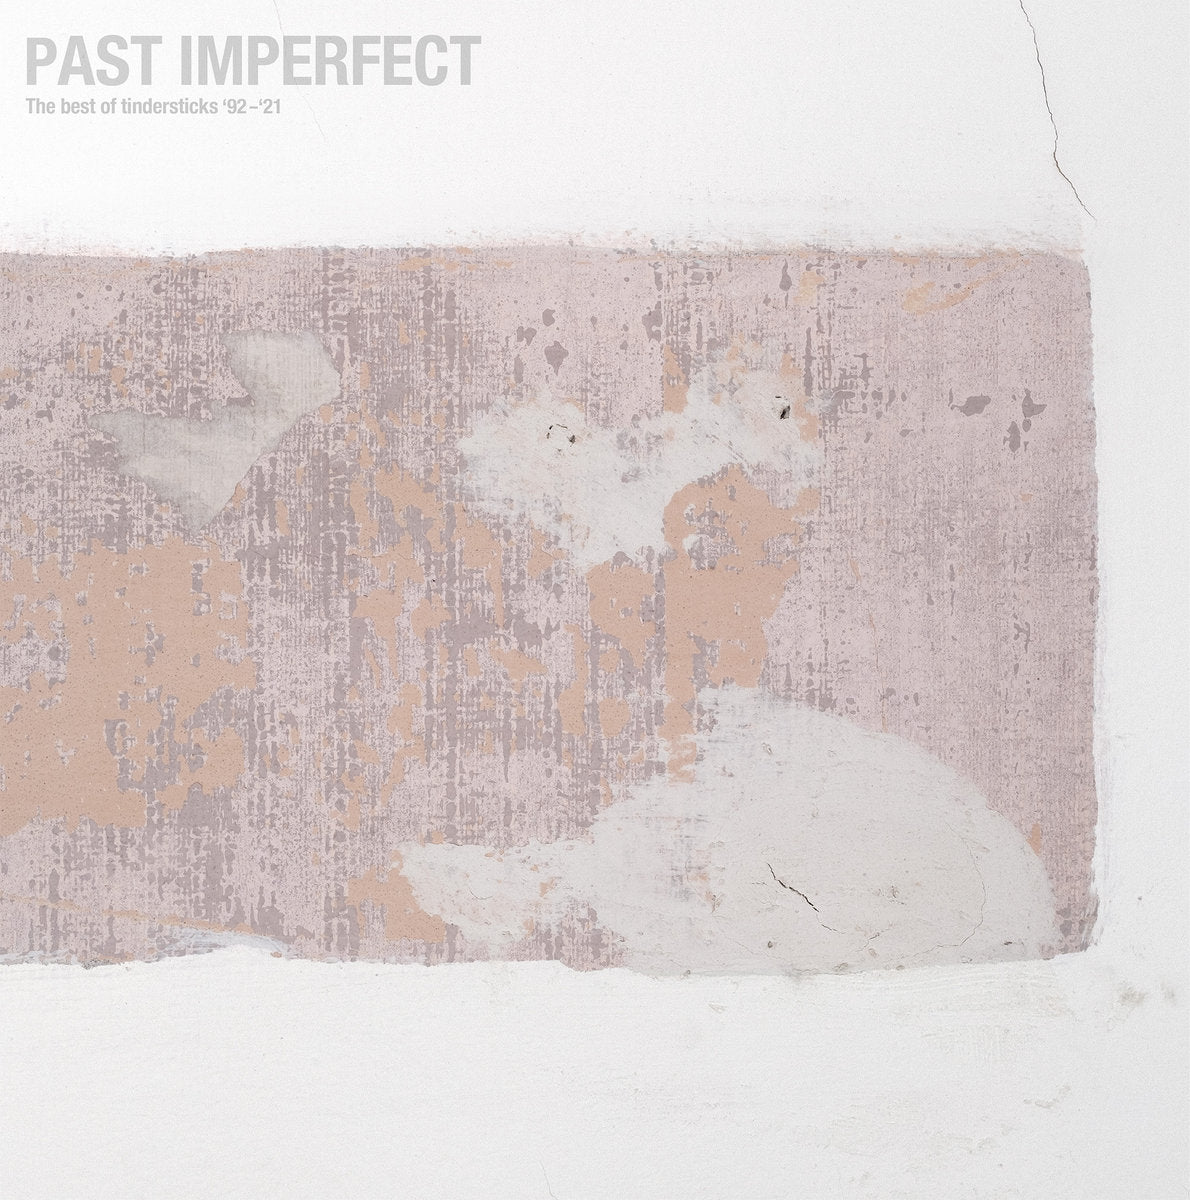 Tindersticks: Past Imperfect - The Best Of Tindersticks '92-'21 (Vinyl 2xLP)